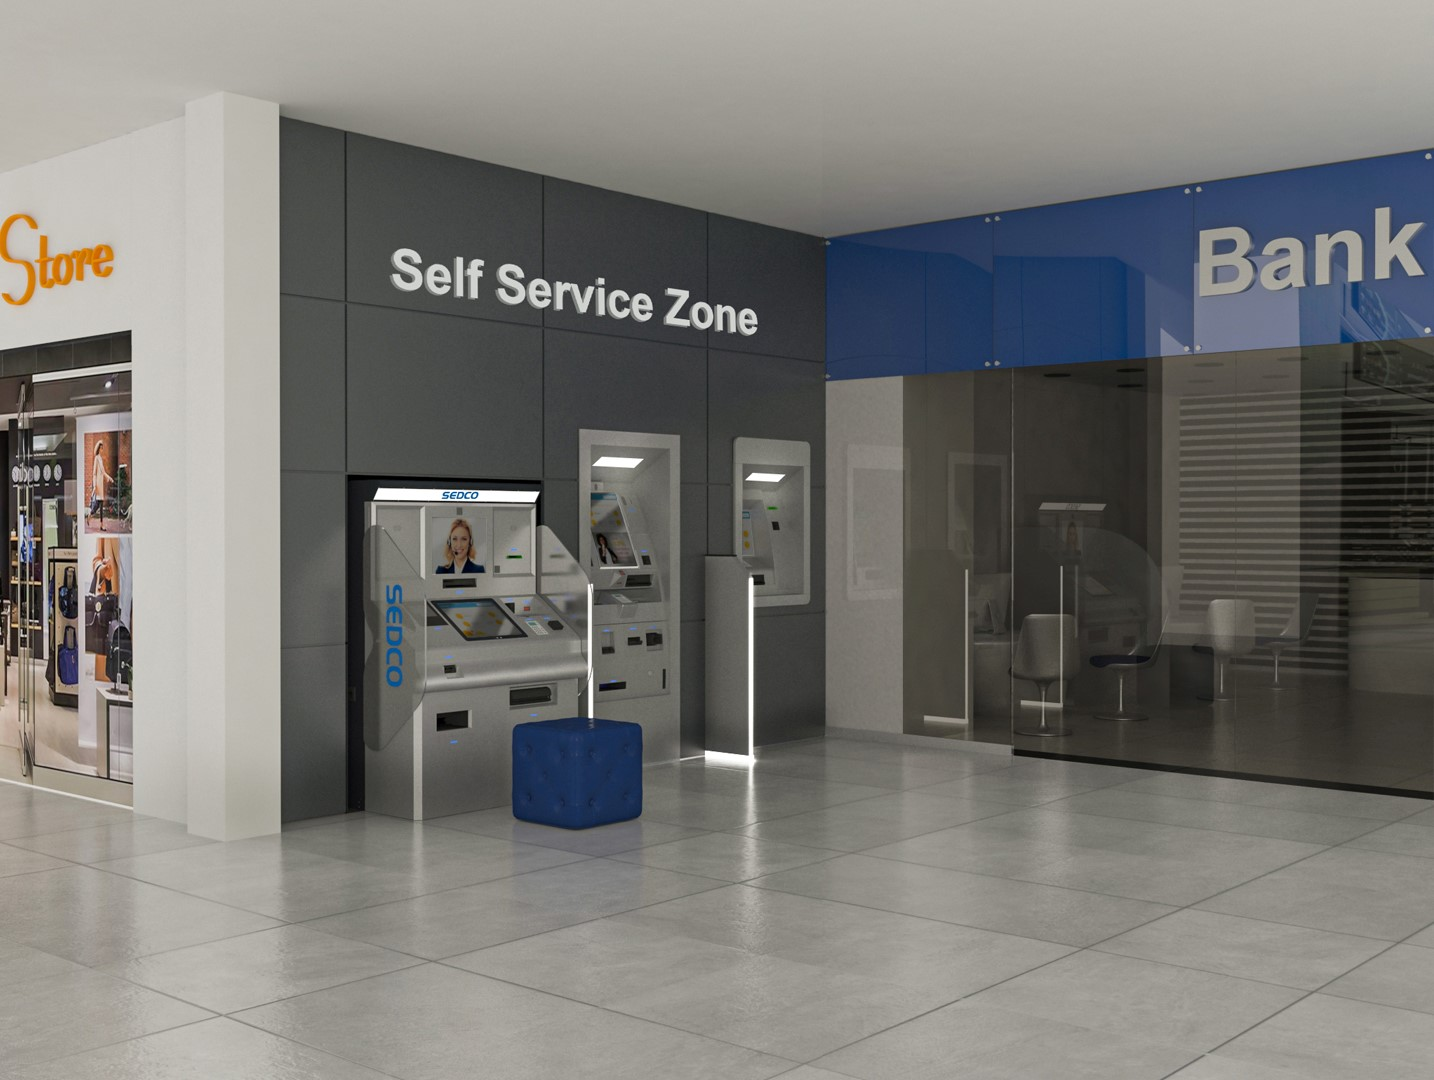 Self service zone - by SEDCO